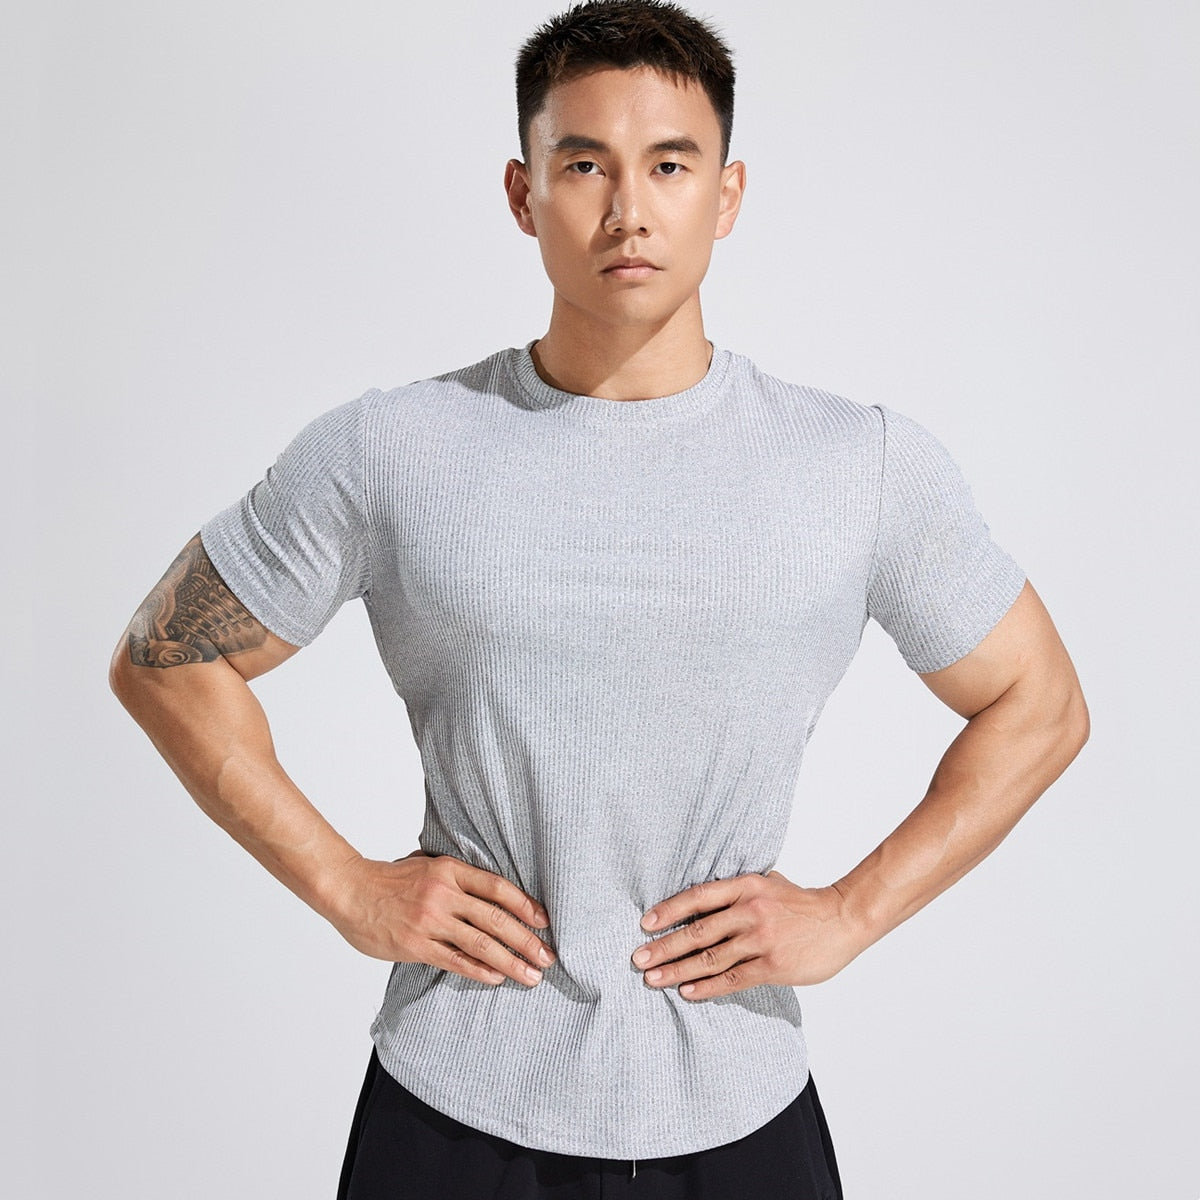 Summer Fitness T-shirt Men Casual Short Sleeve Shirt Male Gym Bodybuilding Skinny Tees Tops Running Sport Black Stripes Clothing